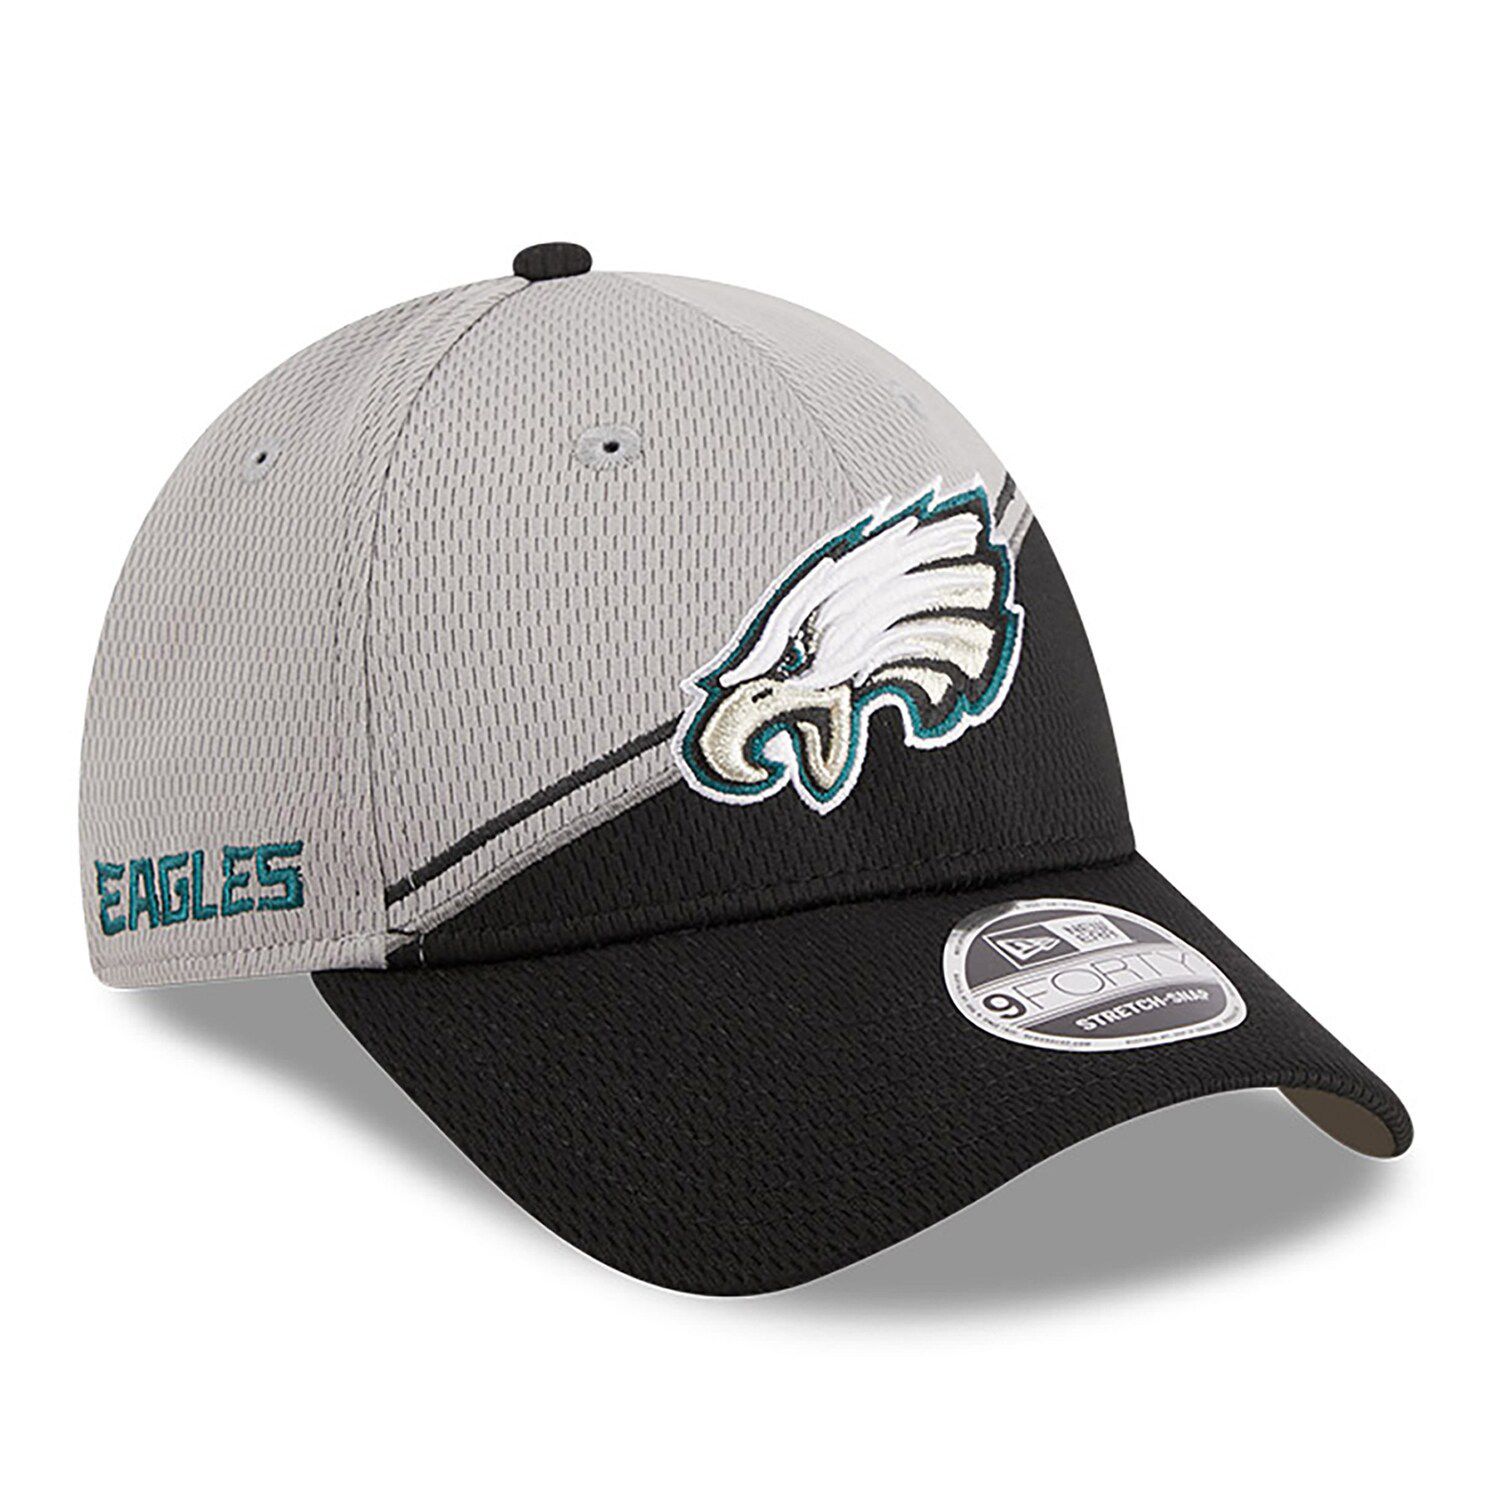 Men's New Era Midnight Green/Black Philadelphia Eagles 2021 NFL Sideline  Road 59FIFTY Fitted Hat